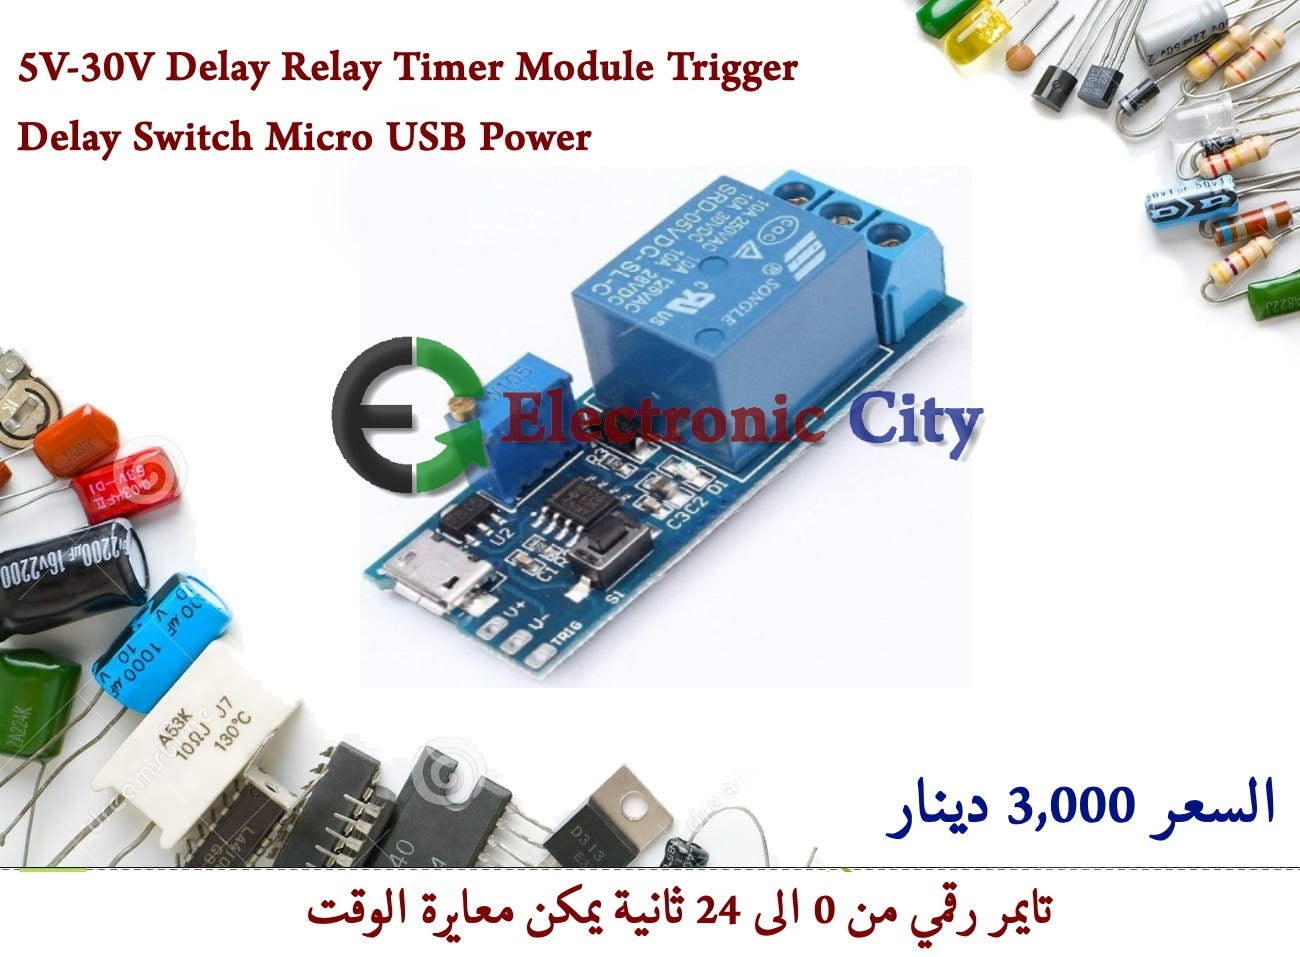 5V-30V Delay Relay Timer Module Trigger Delay Switch Micro USB Power.